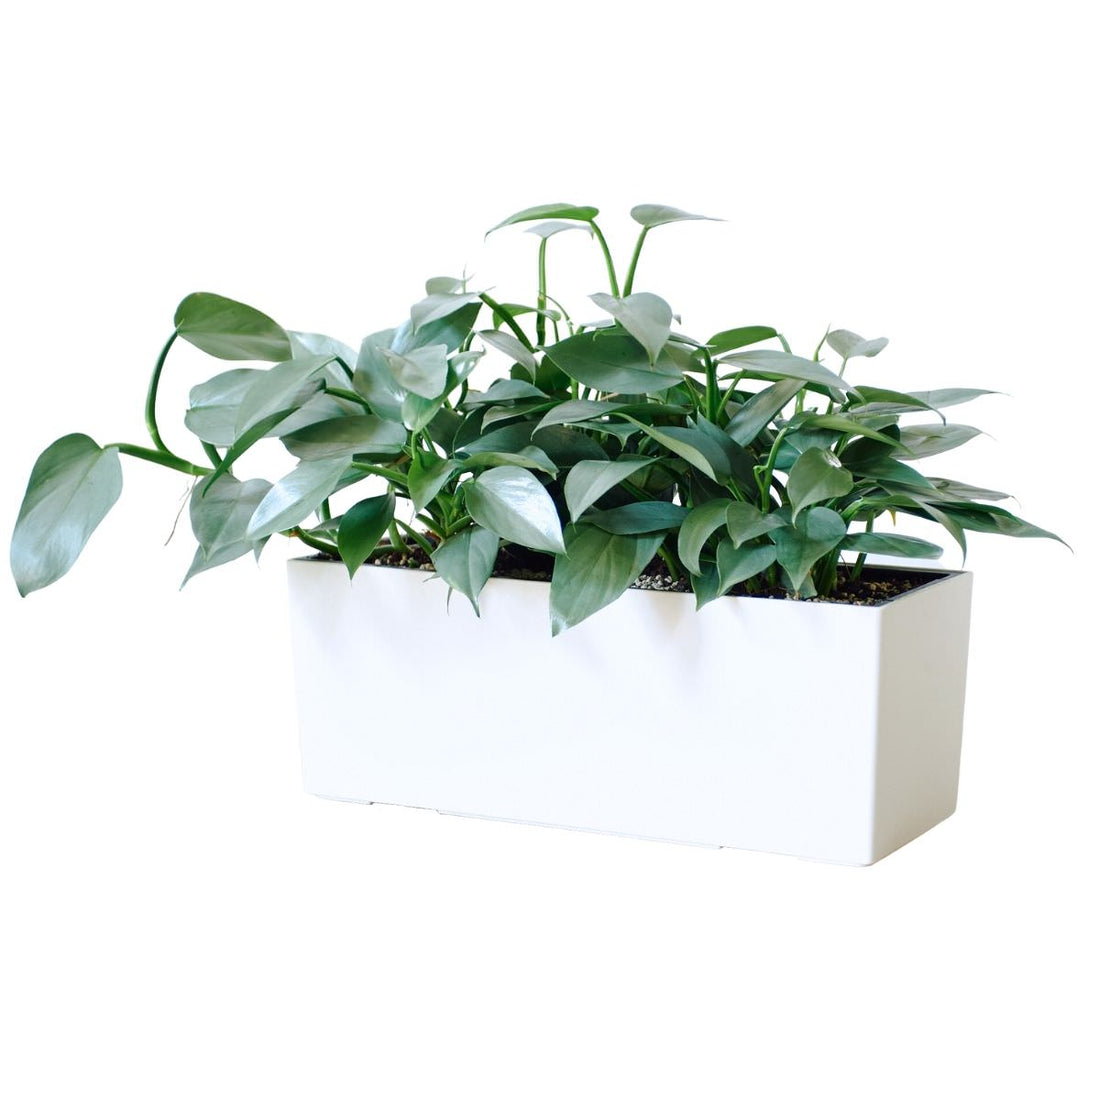 Silverscape Balconera - White - My City Plants